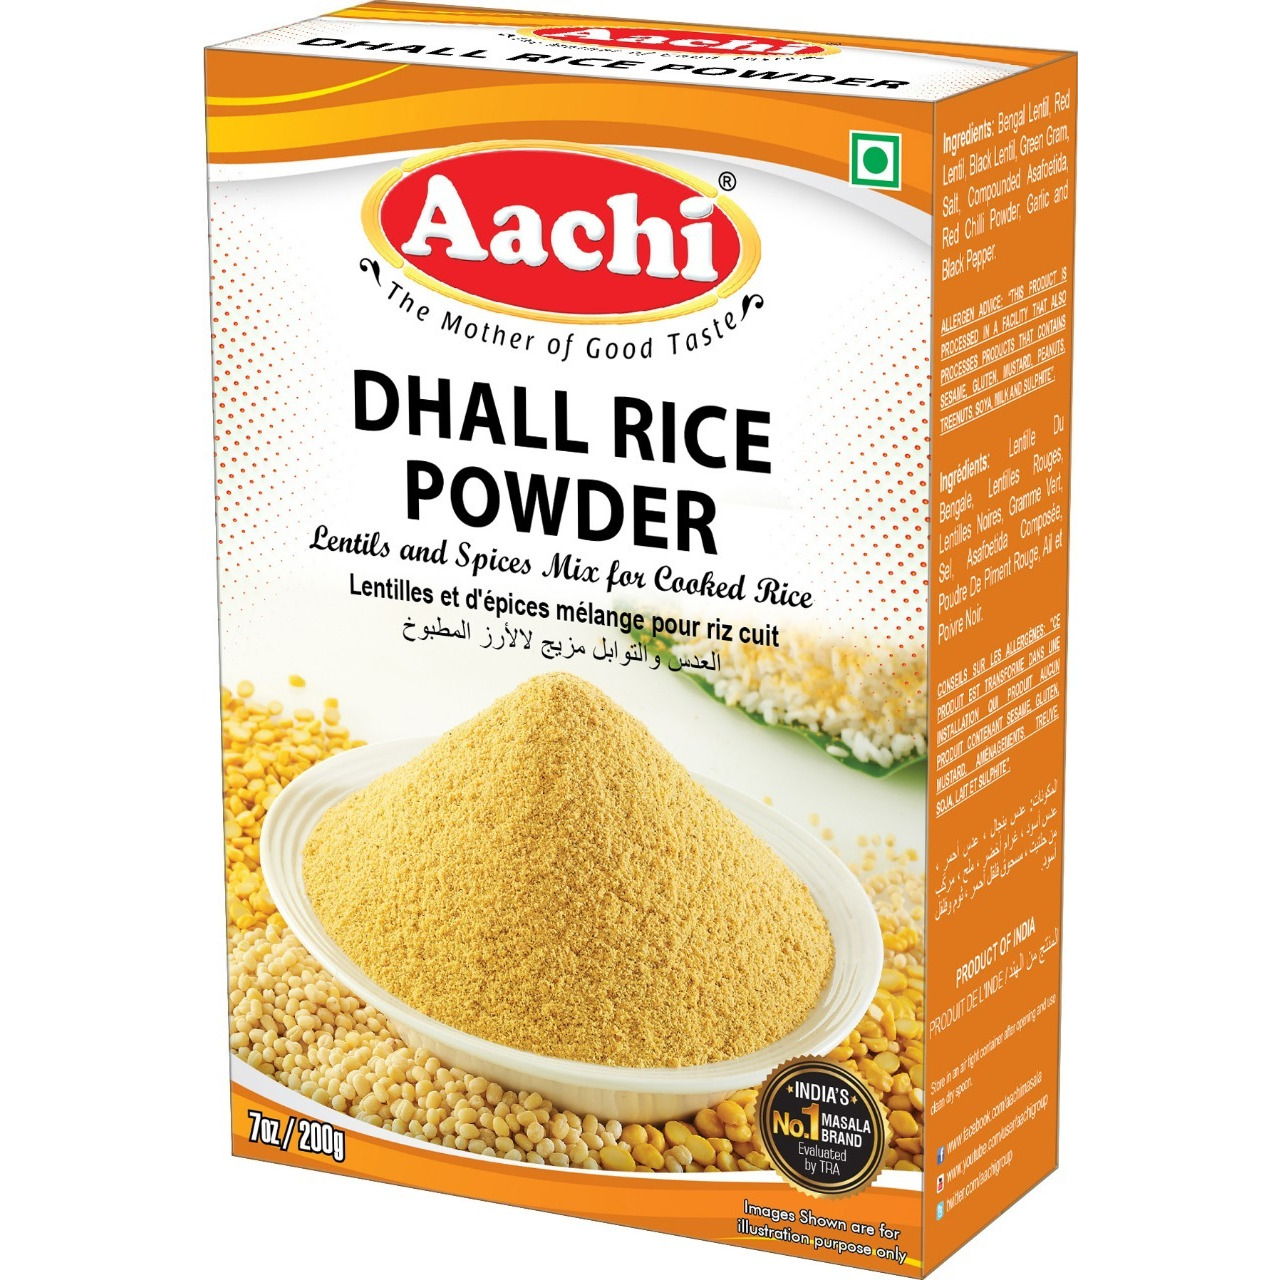 Aachi Dhall Rice Powder - 200 Gm (7 Oz) [FS]